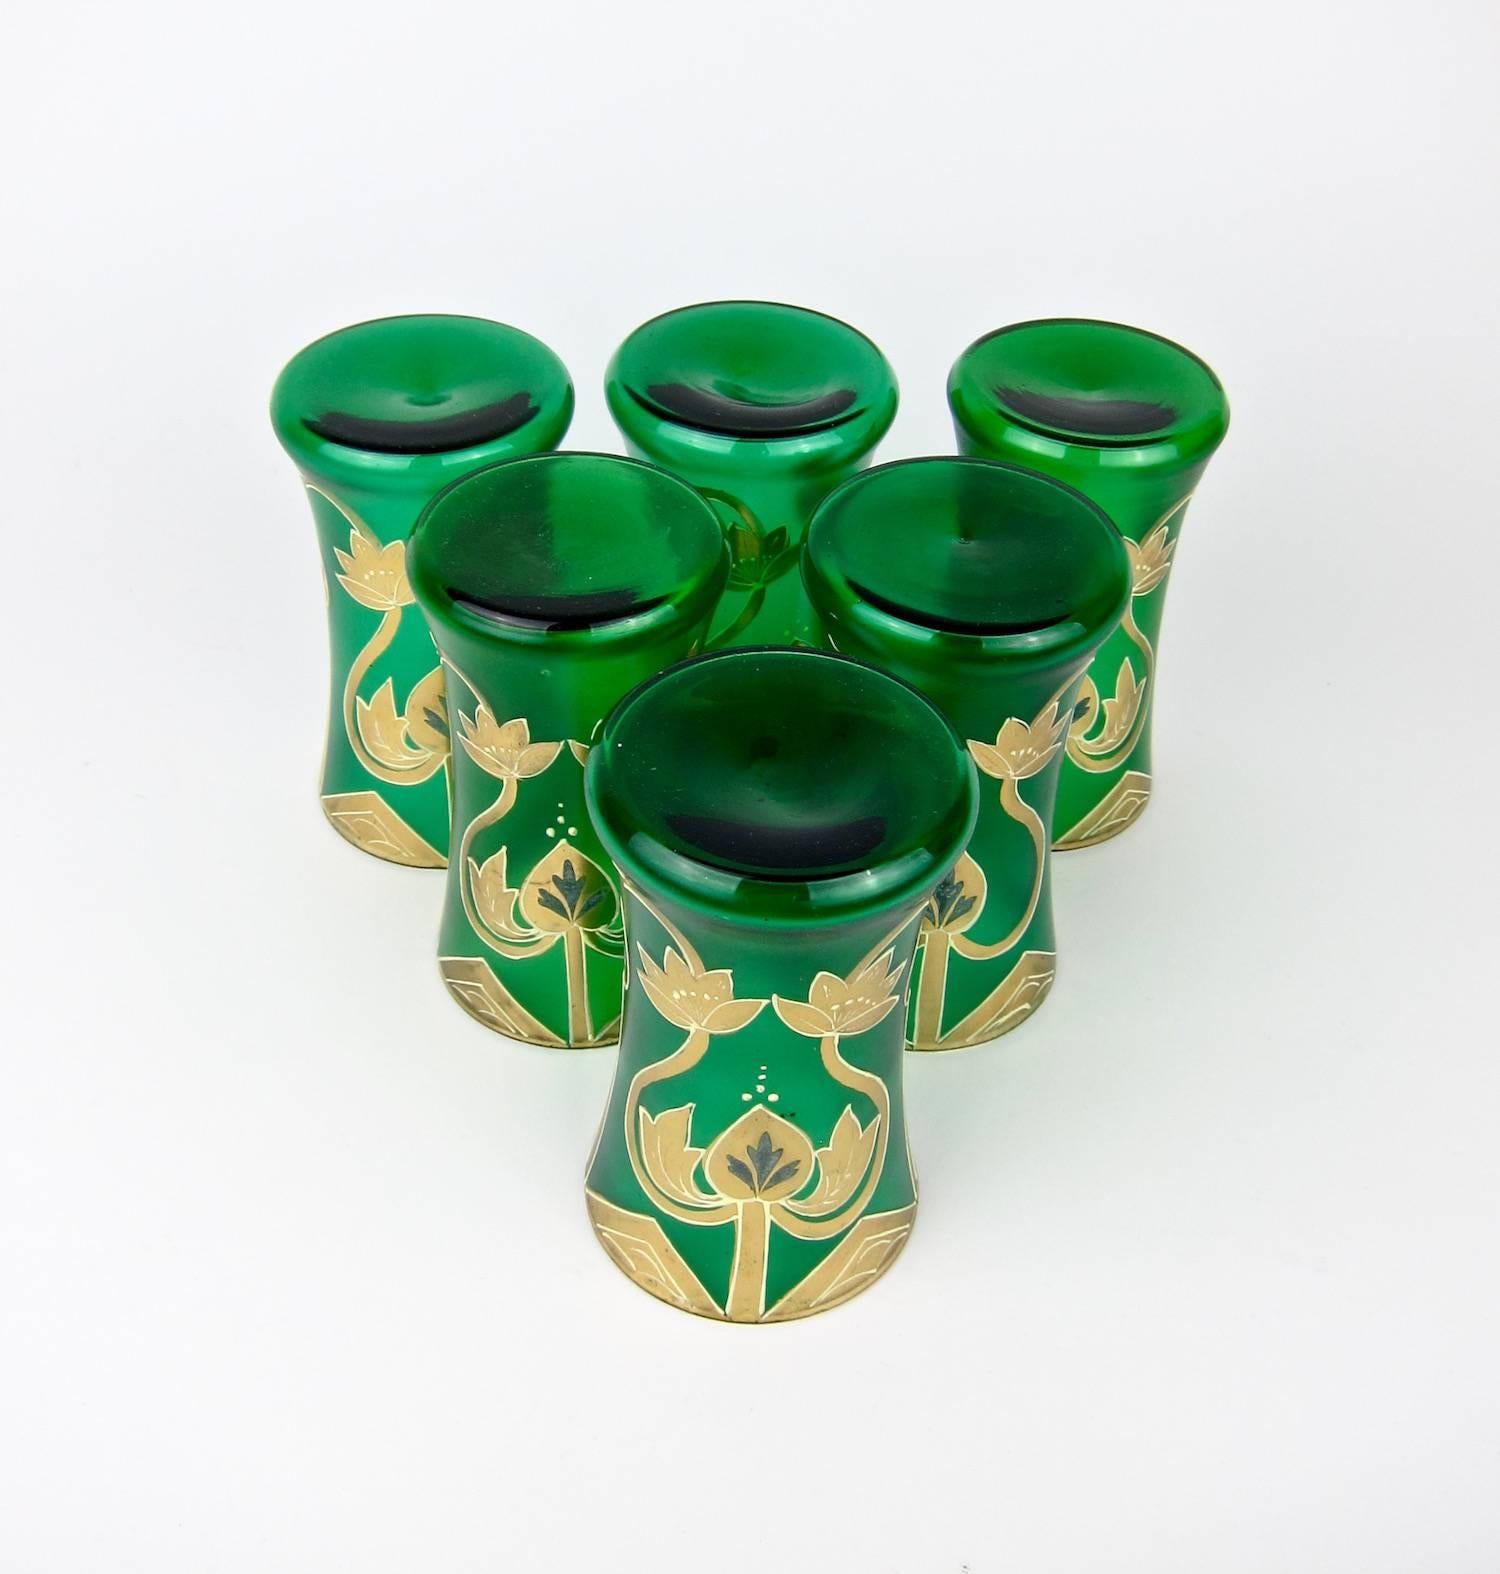 19th Century Antique Green Drinking Glasses with Golden Art Nouveau Enamel Decor